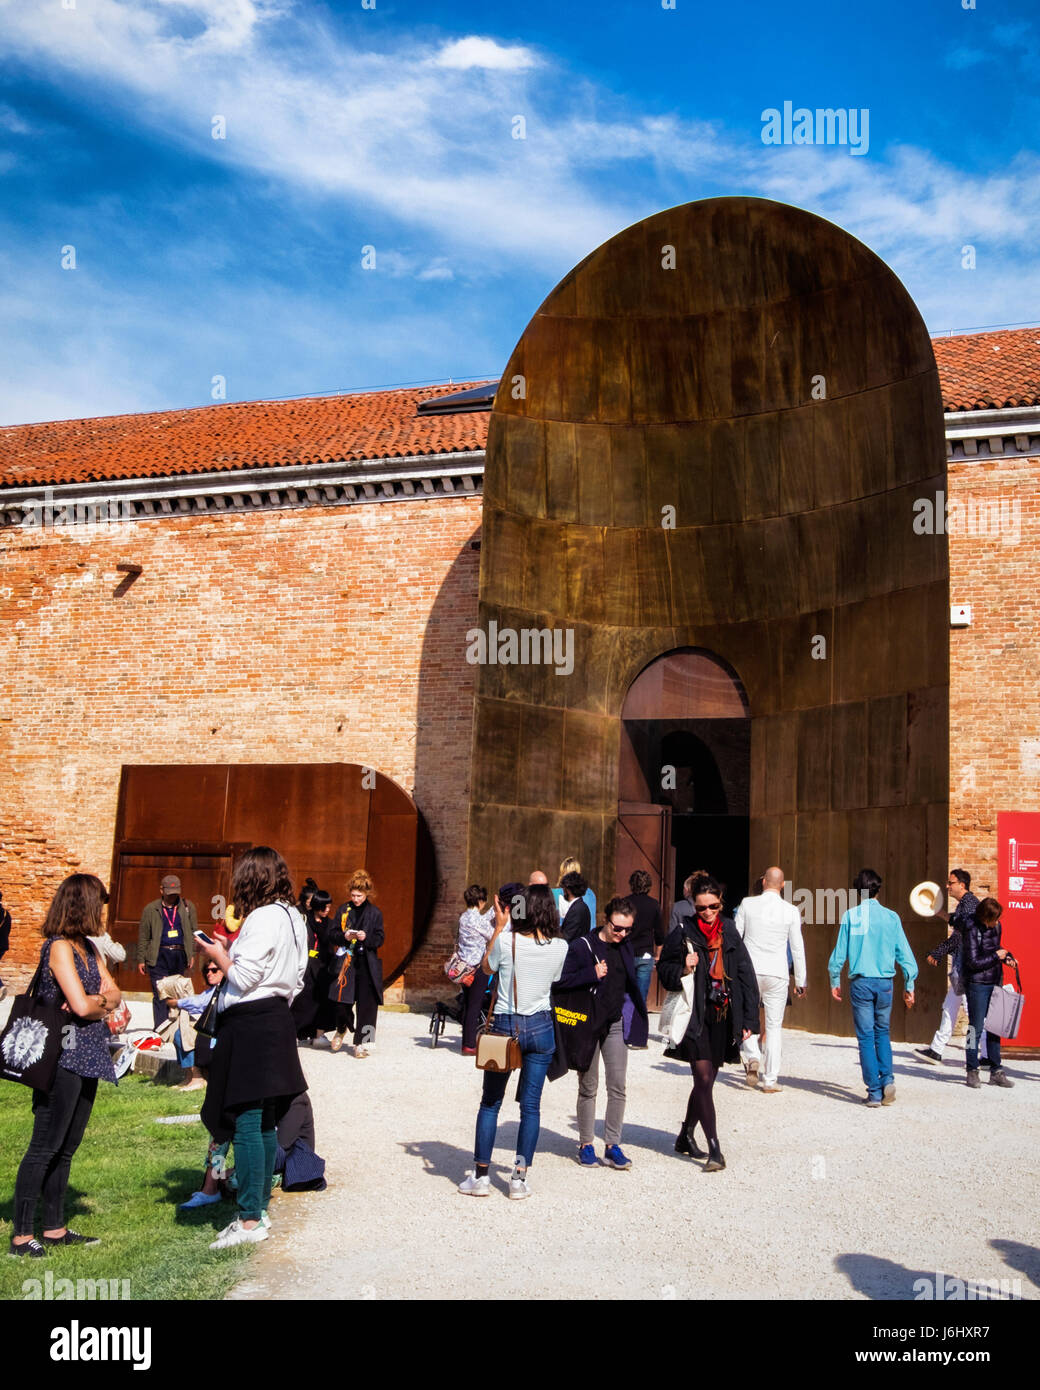 Venedig, Castello, Arsenale. 57. Venedig Biennale 2017, La Biennale di Venezia.Italy Pavillon außen, Menschen außerhalb des italienischen Pavillons Stockfoto